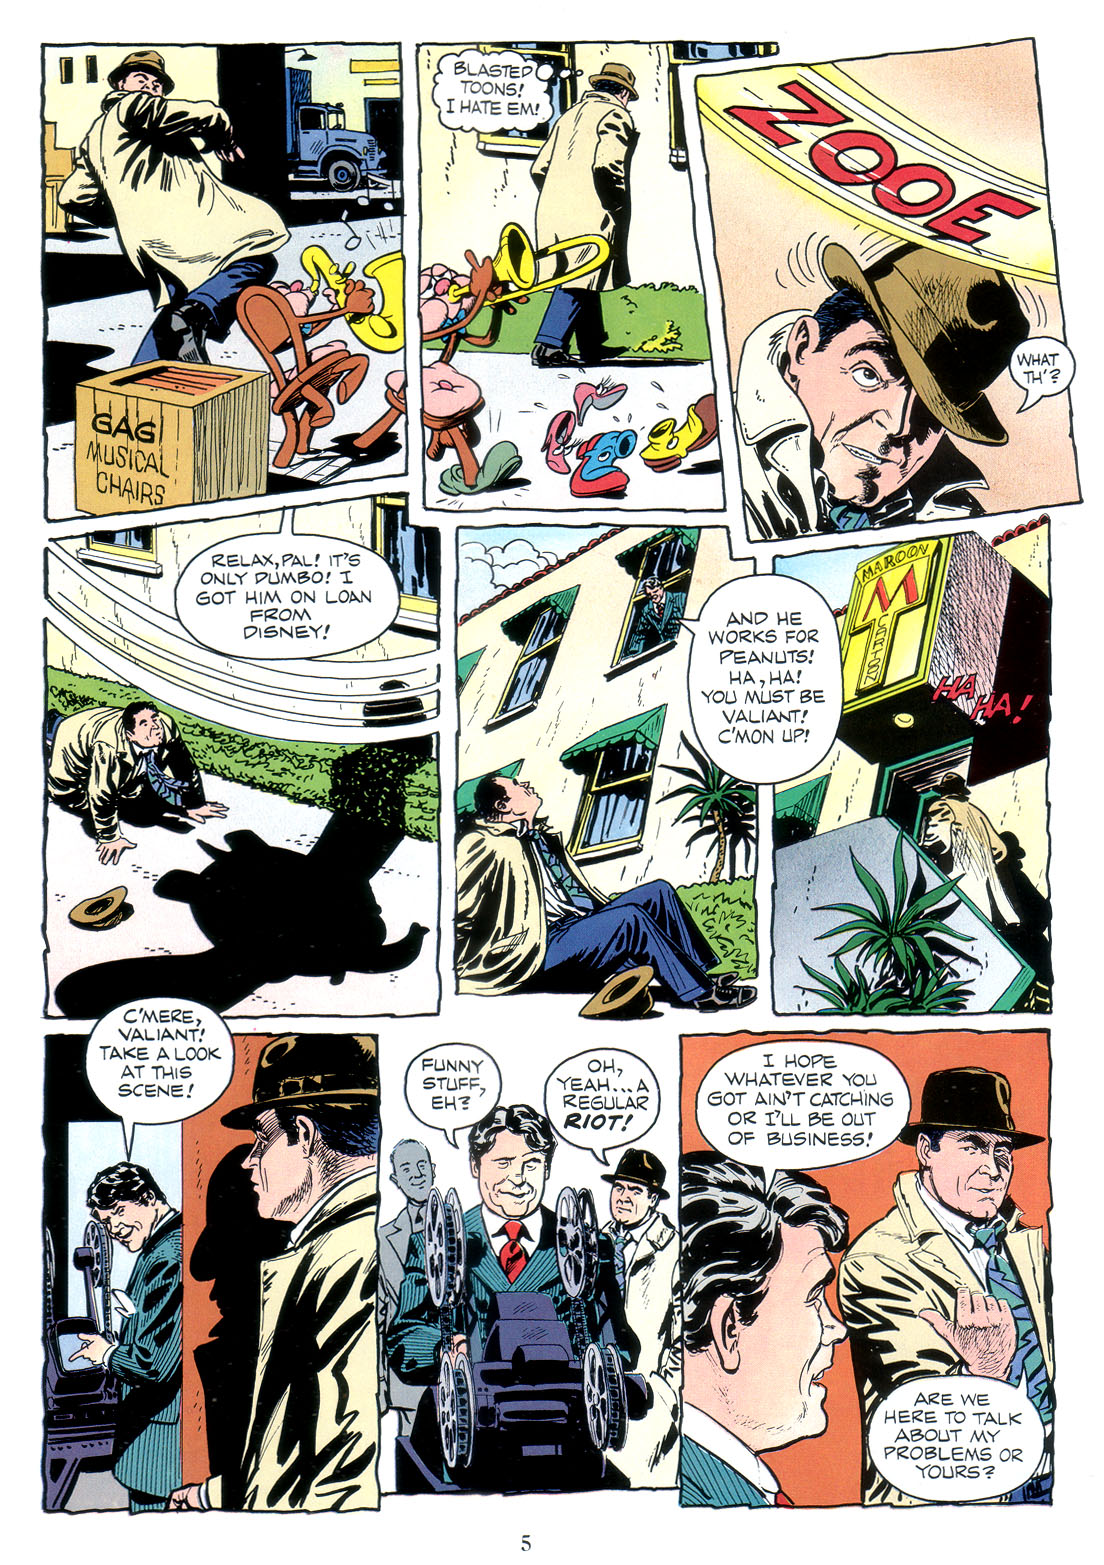 Marvel Graphic Novel issue 41 - Who Framed Roger Rabbit - Page 7